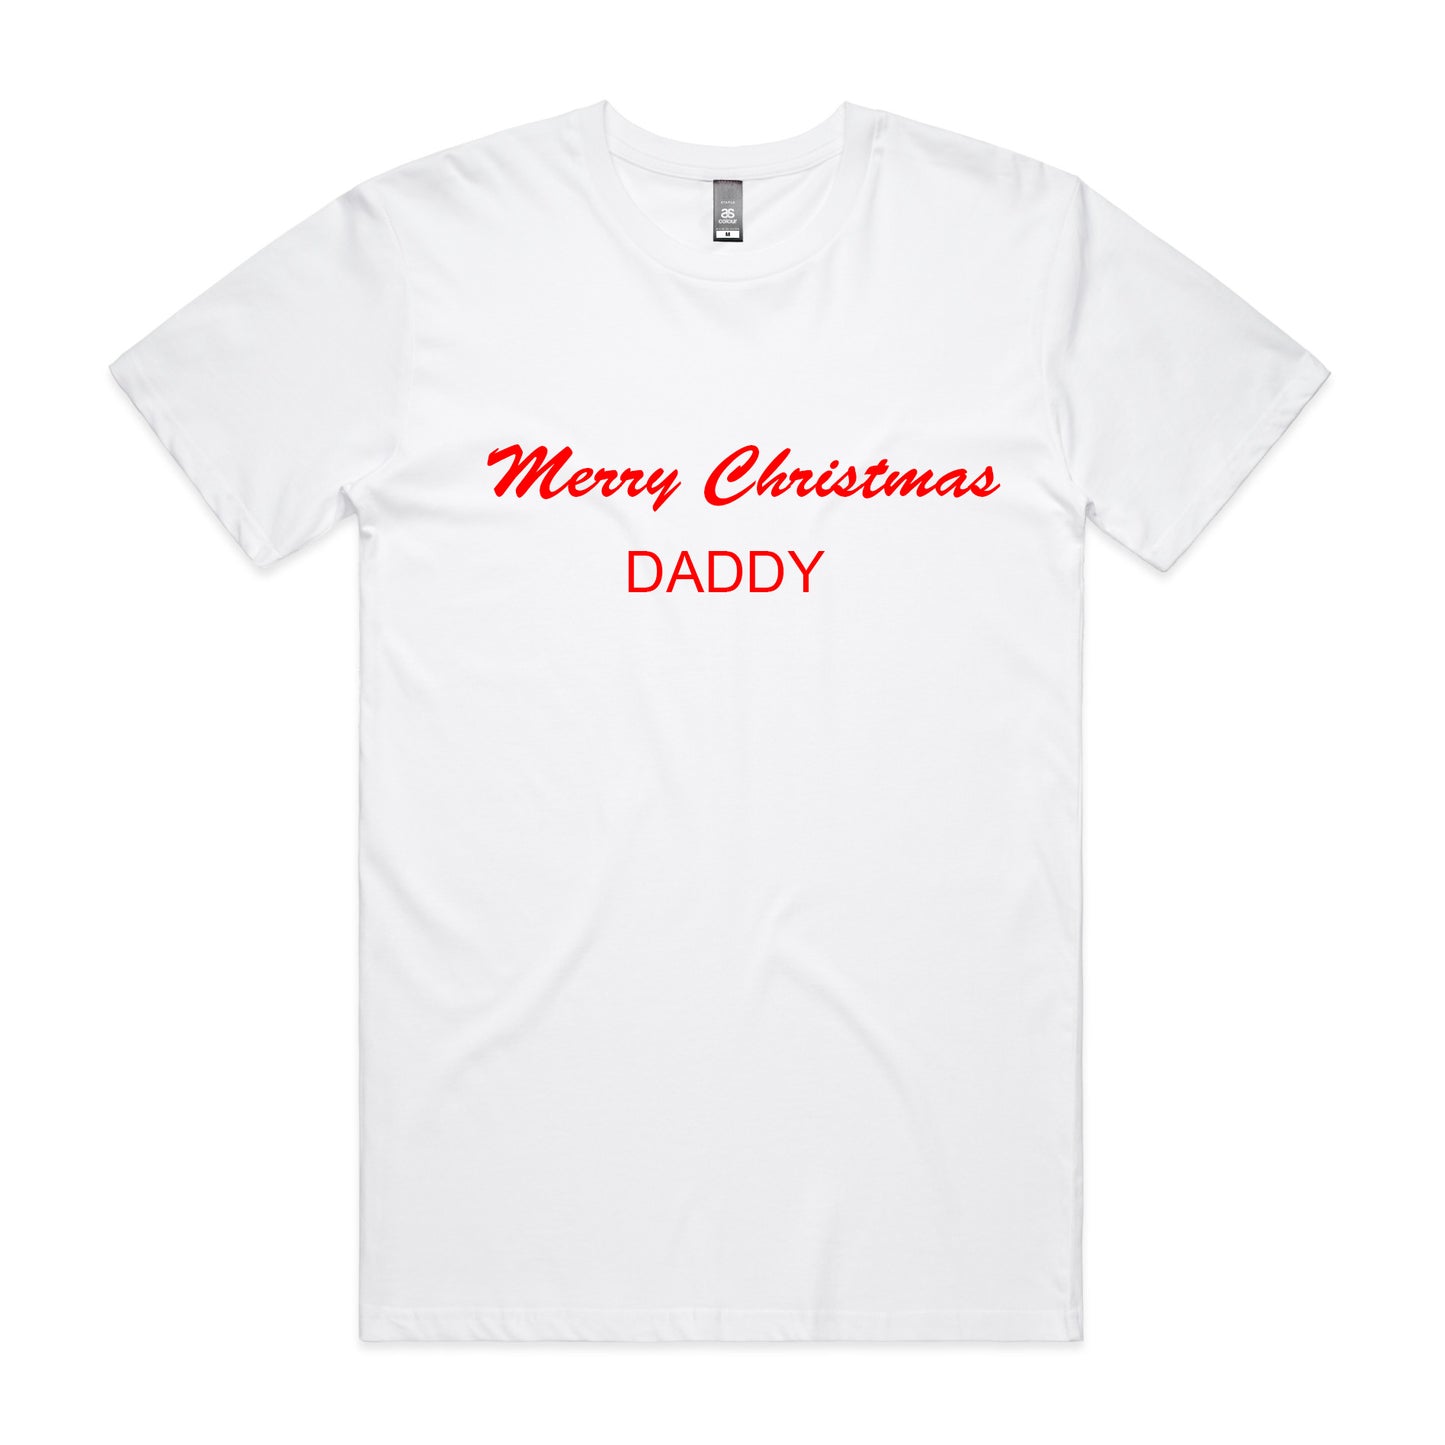 Merry Christmas Slogan - Mens Tee